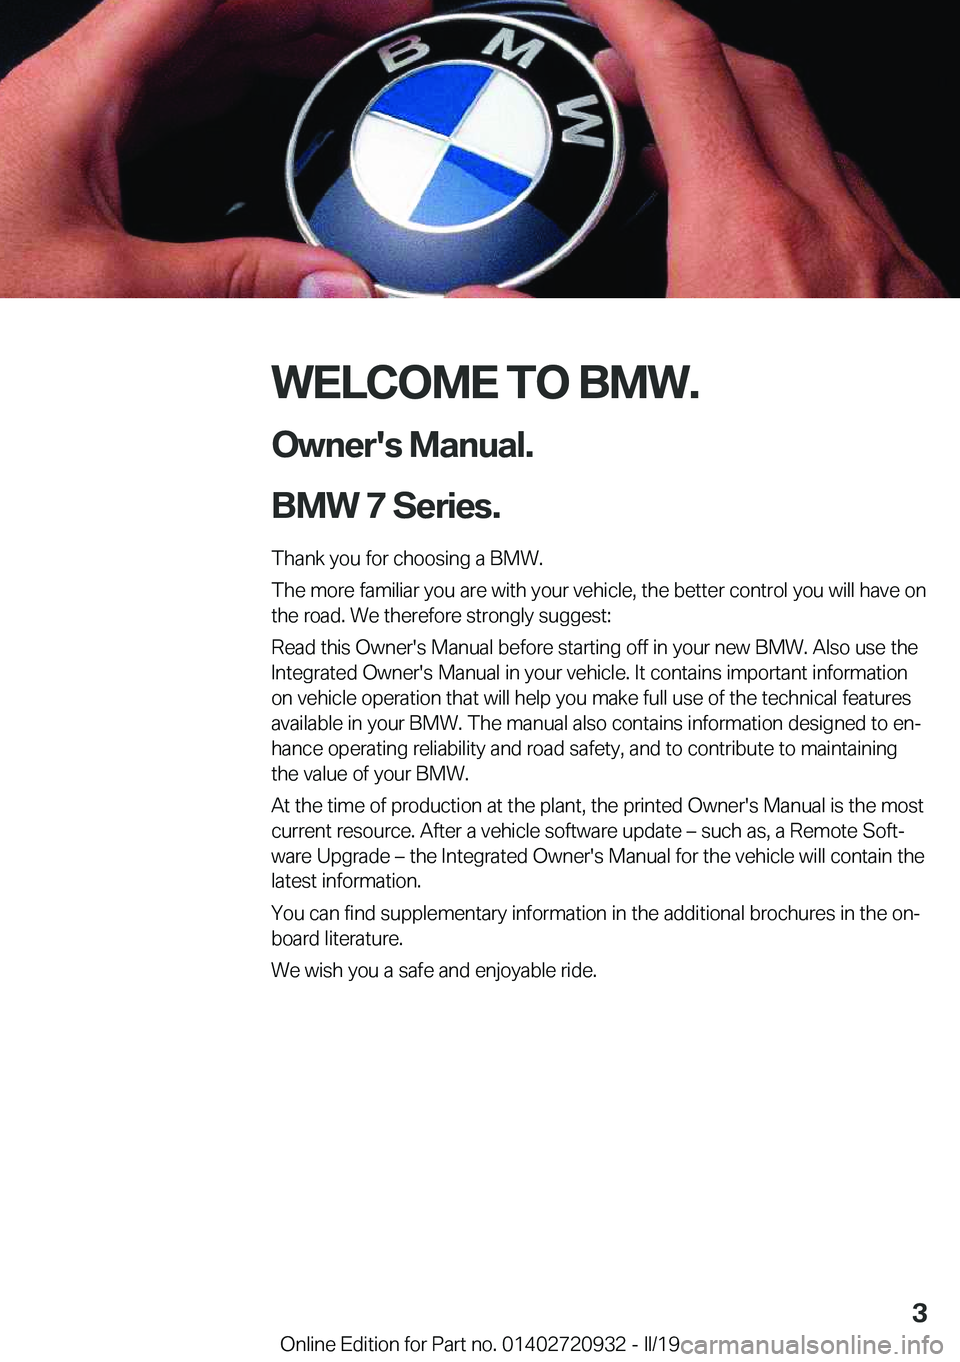 BMW 7 SERIES 2020  Owners Manual �W�E�L�C�O�M�E��T�O��B�M�W�.�O�w�n�e�r�'�s��M�a�n�u�a�l�.
�B�M�W��7��S�e�r�i�e�s�.
�T�h�a�n�k��y�o�u��f�o�r��c�h�o�o�s�i�n�g��a��B�M�W�.
�T�h�e��m�o�r�e��f�a�m�i�l�i�a�r��y�o�u��a�r�